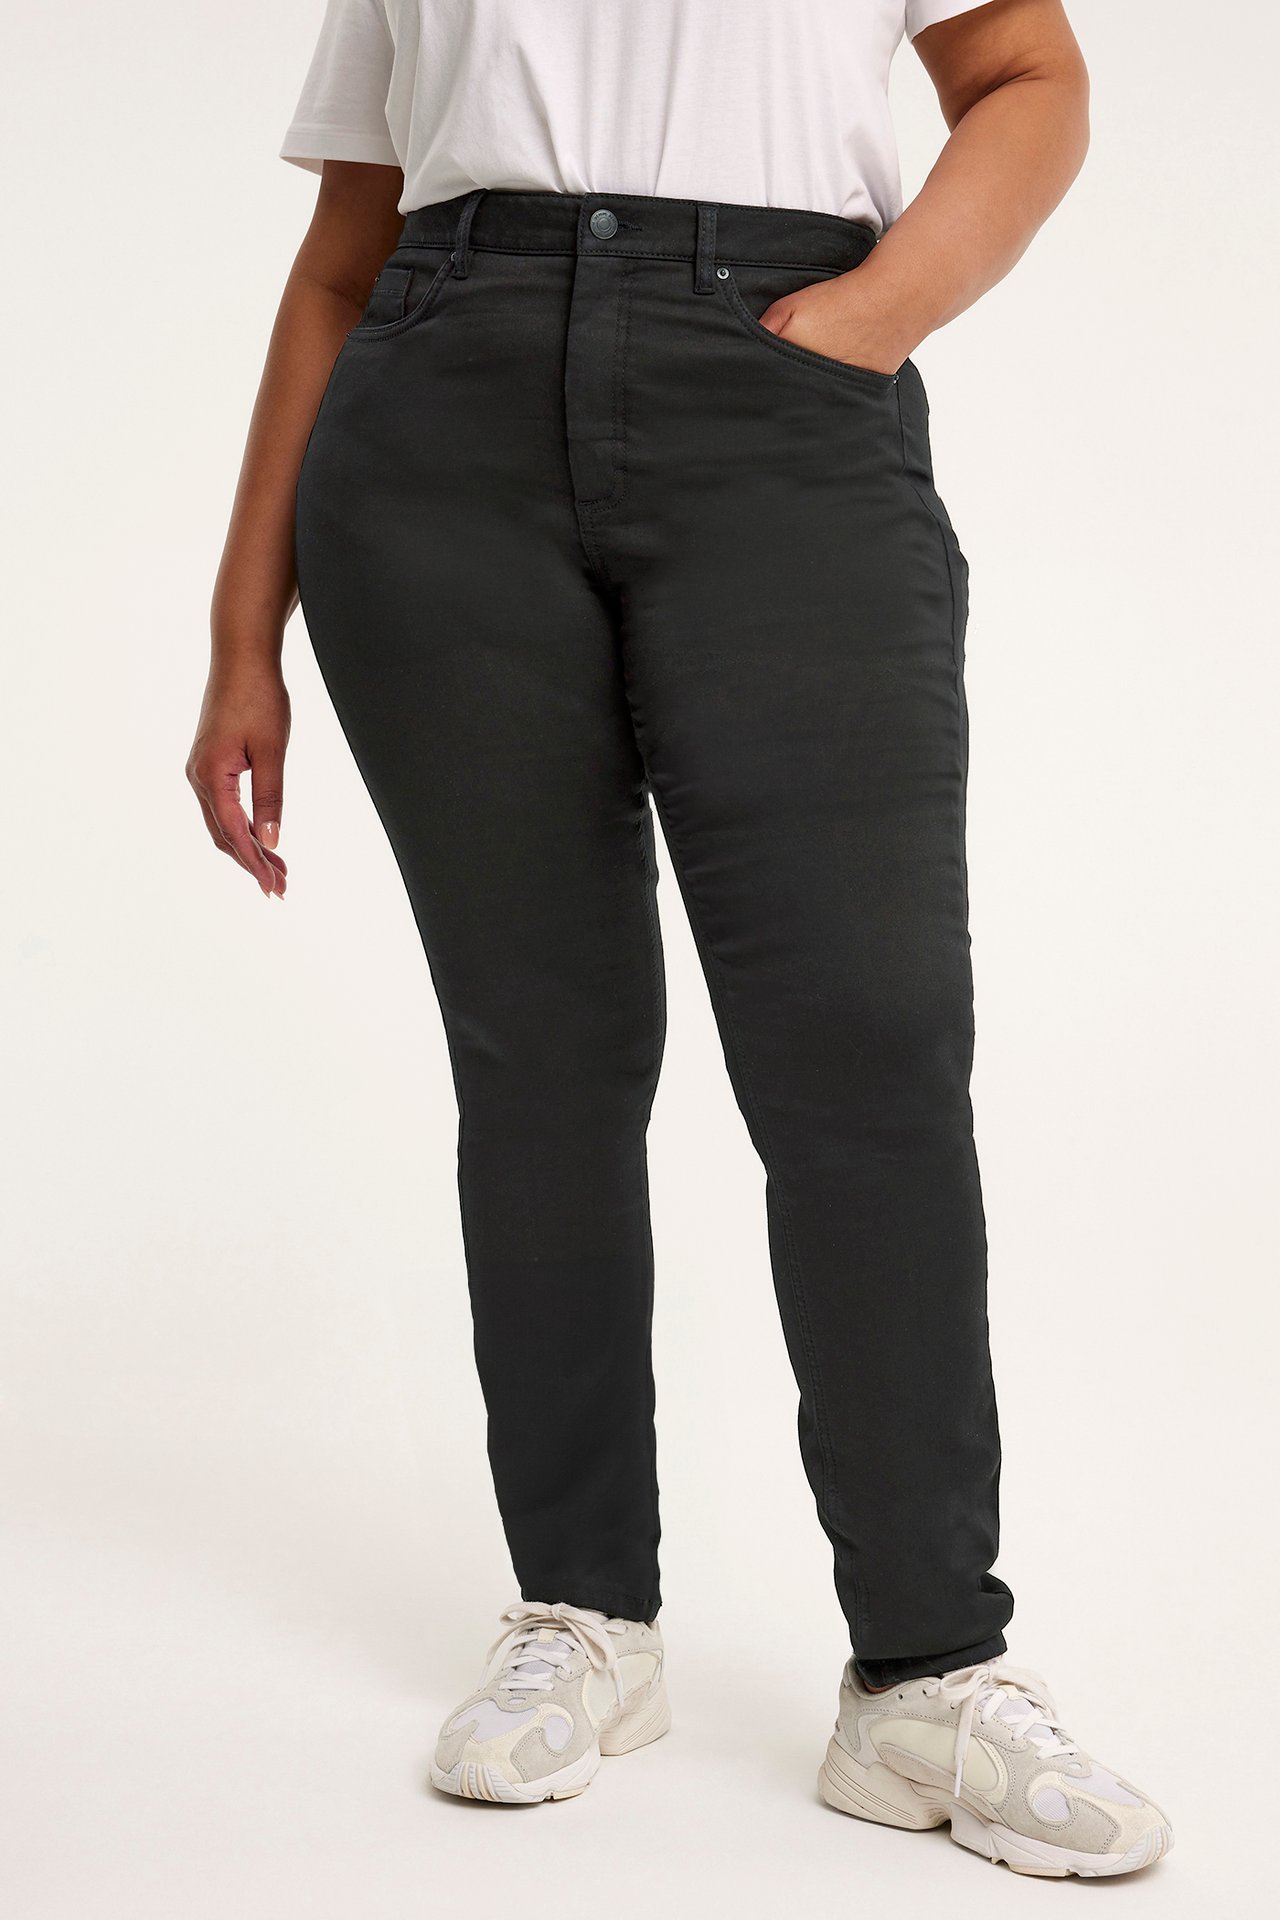 Ebba slim jeans extra long leg - Musta - 172cm / Storlek: 50L - 3